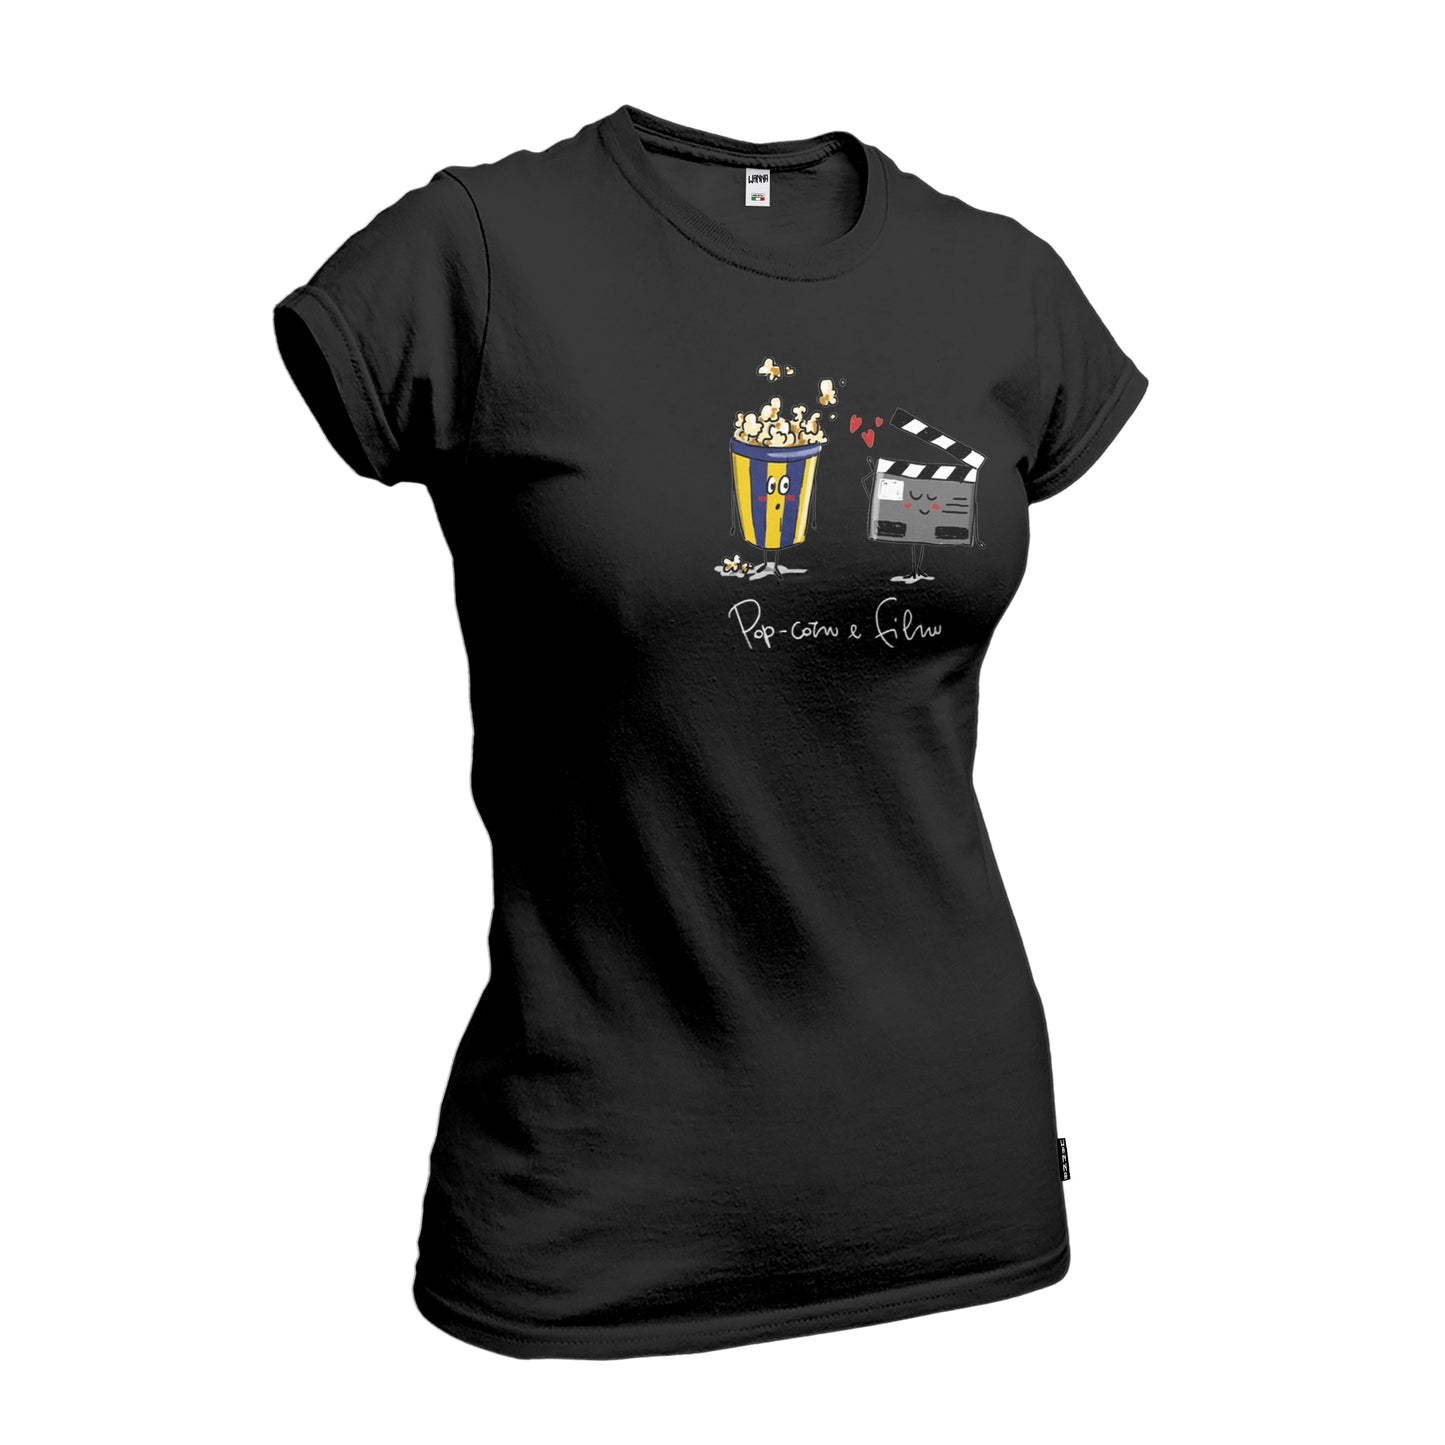 Pop Corn & Film - T-Shirt Donna